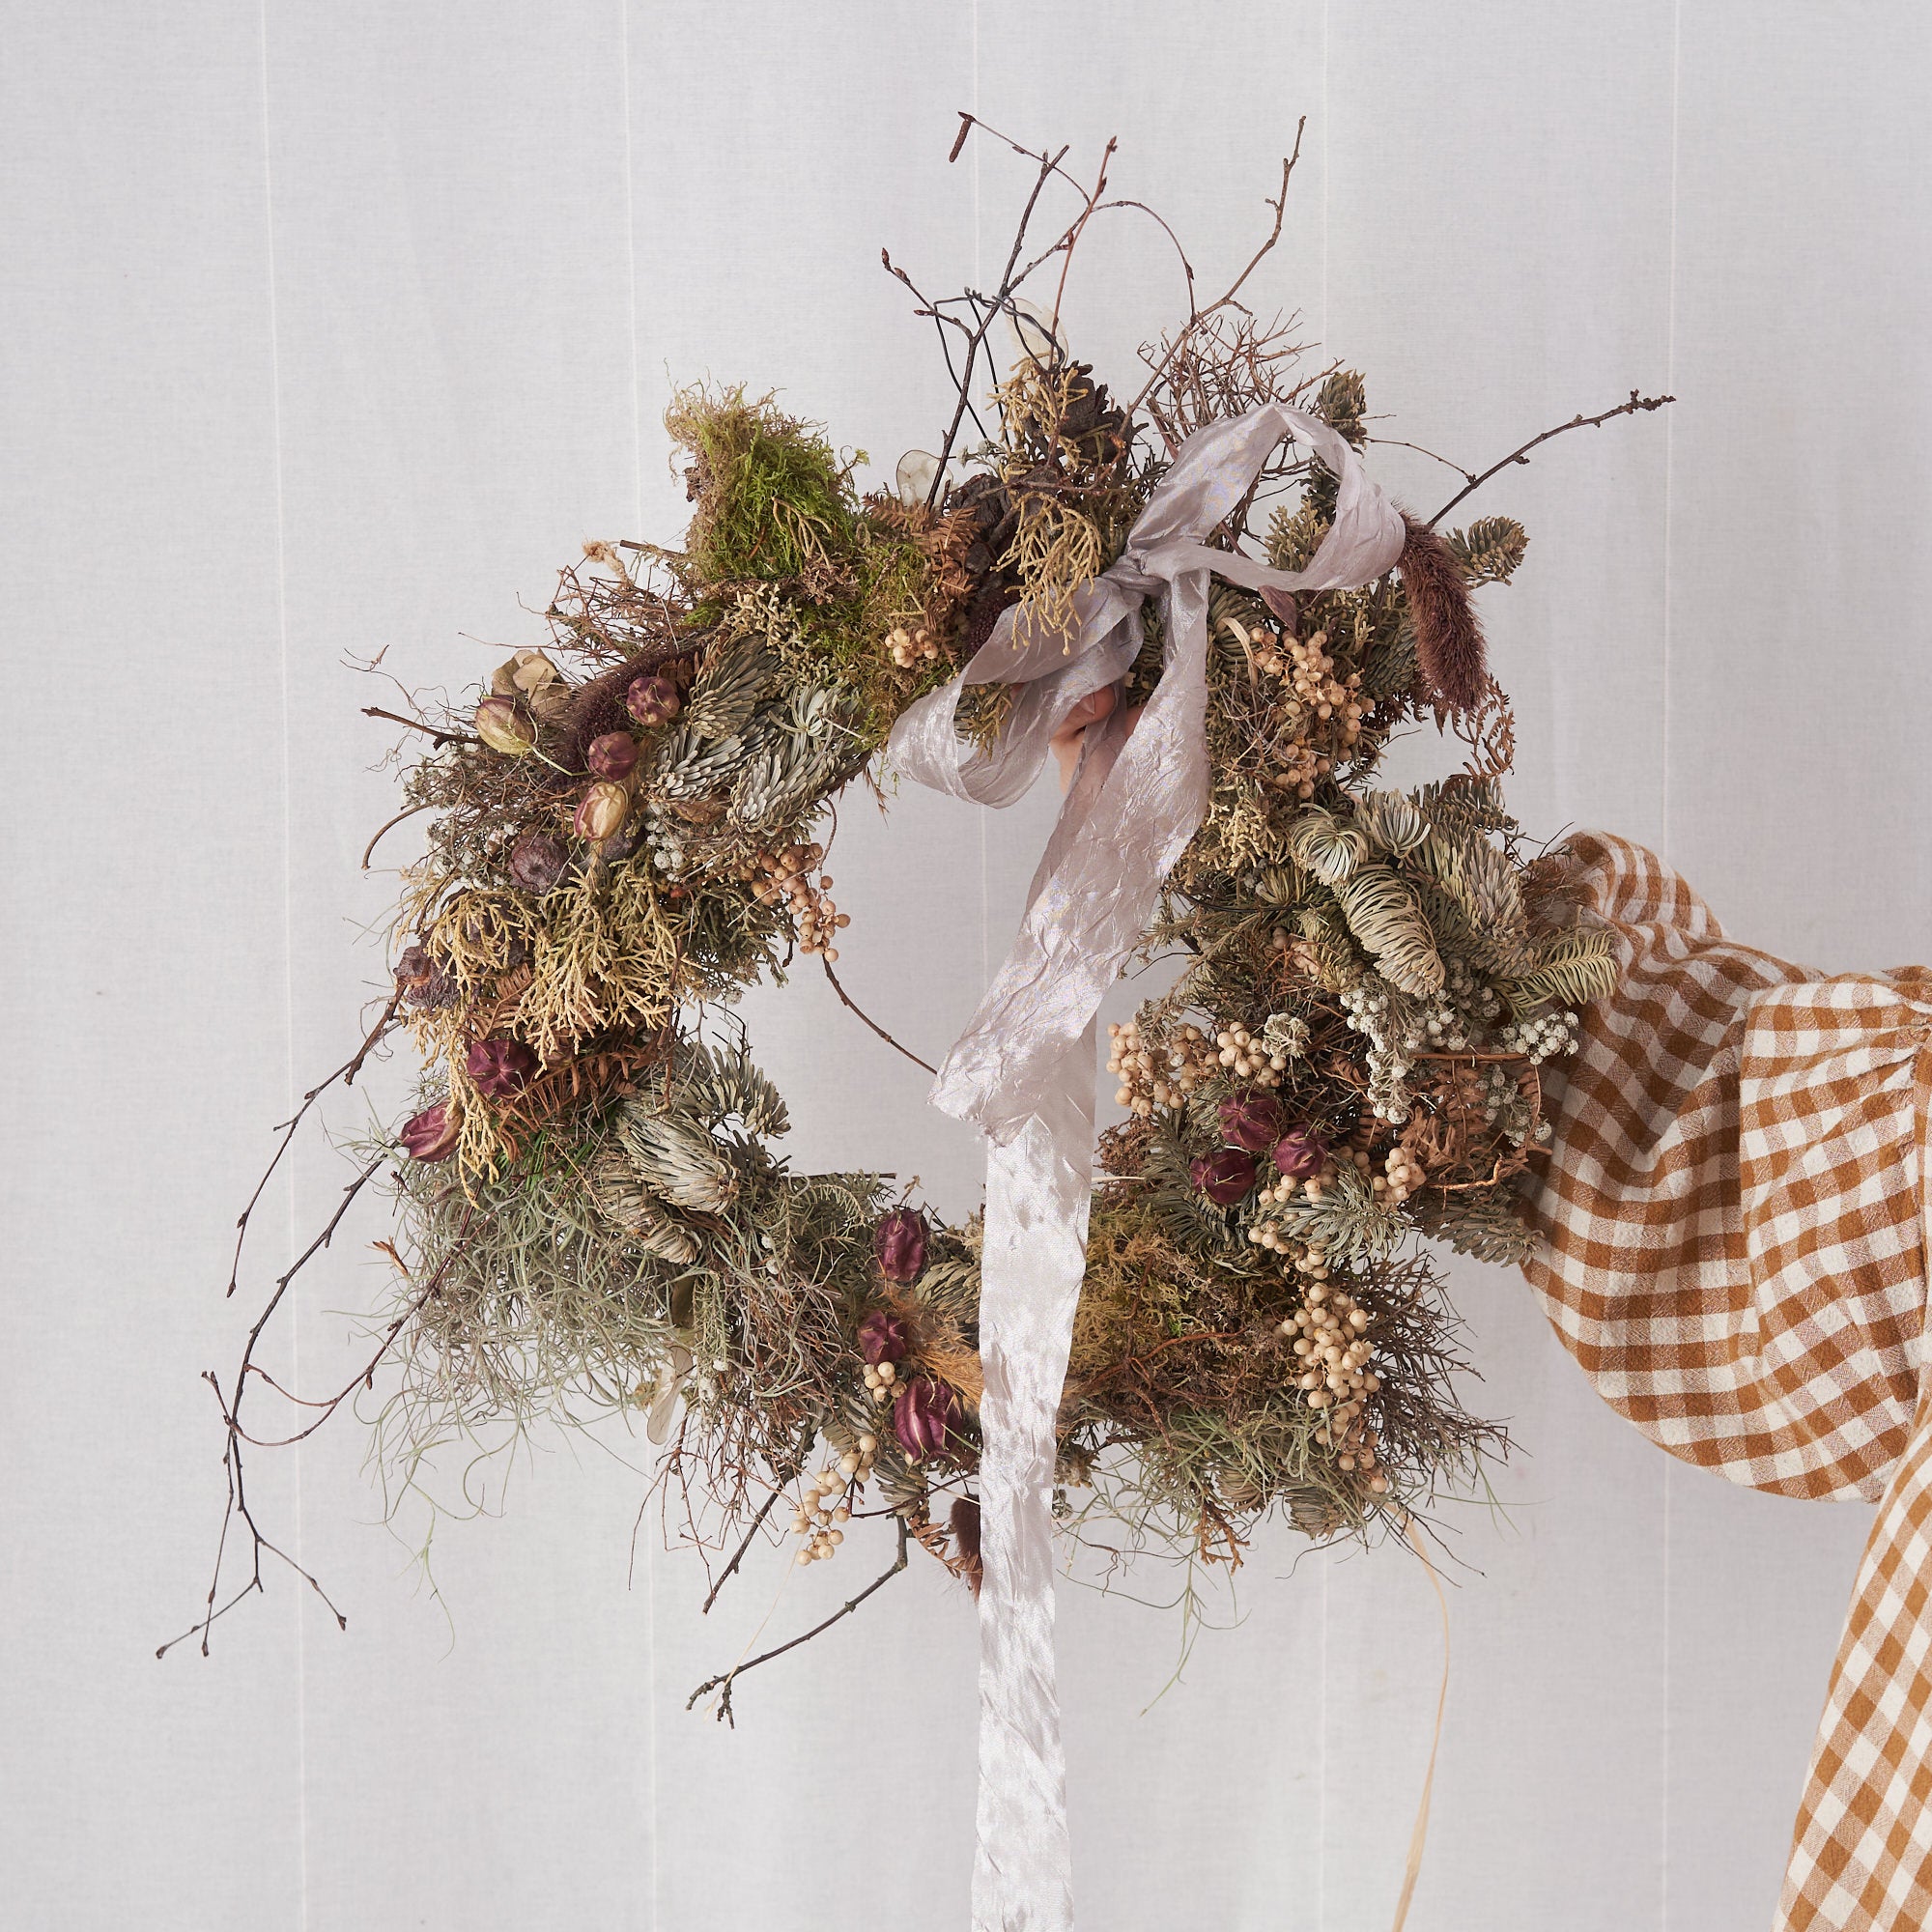 Workshop: Everlasting Christmas Wreath Making